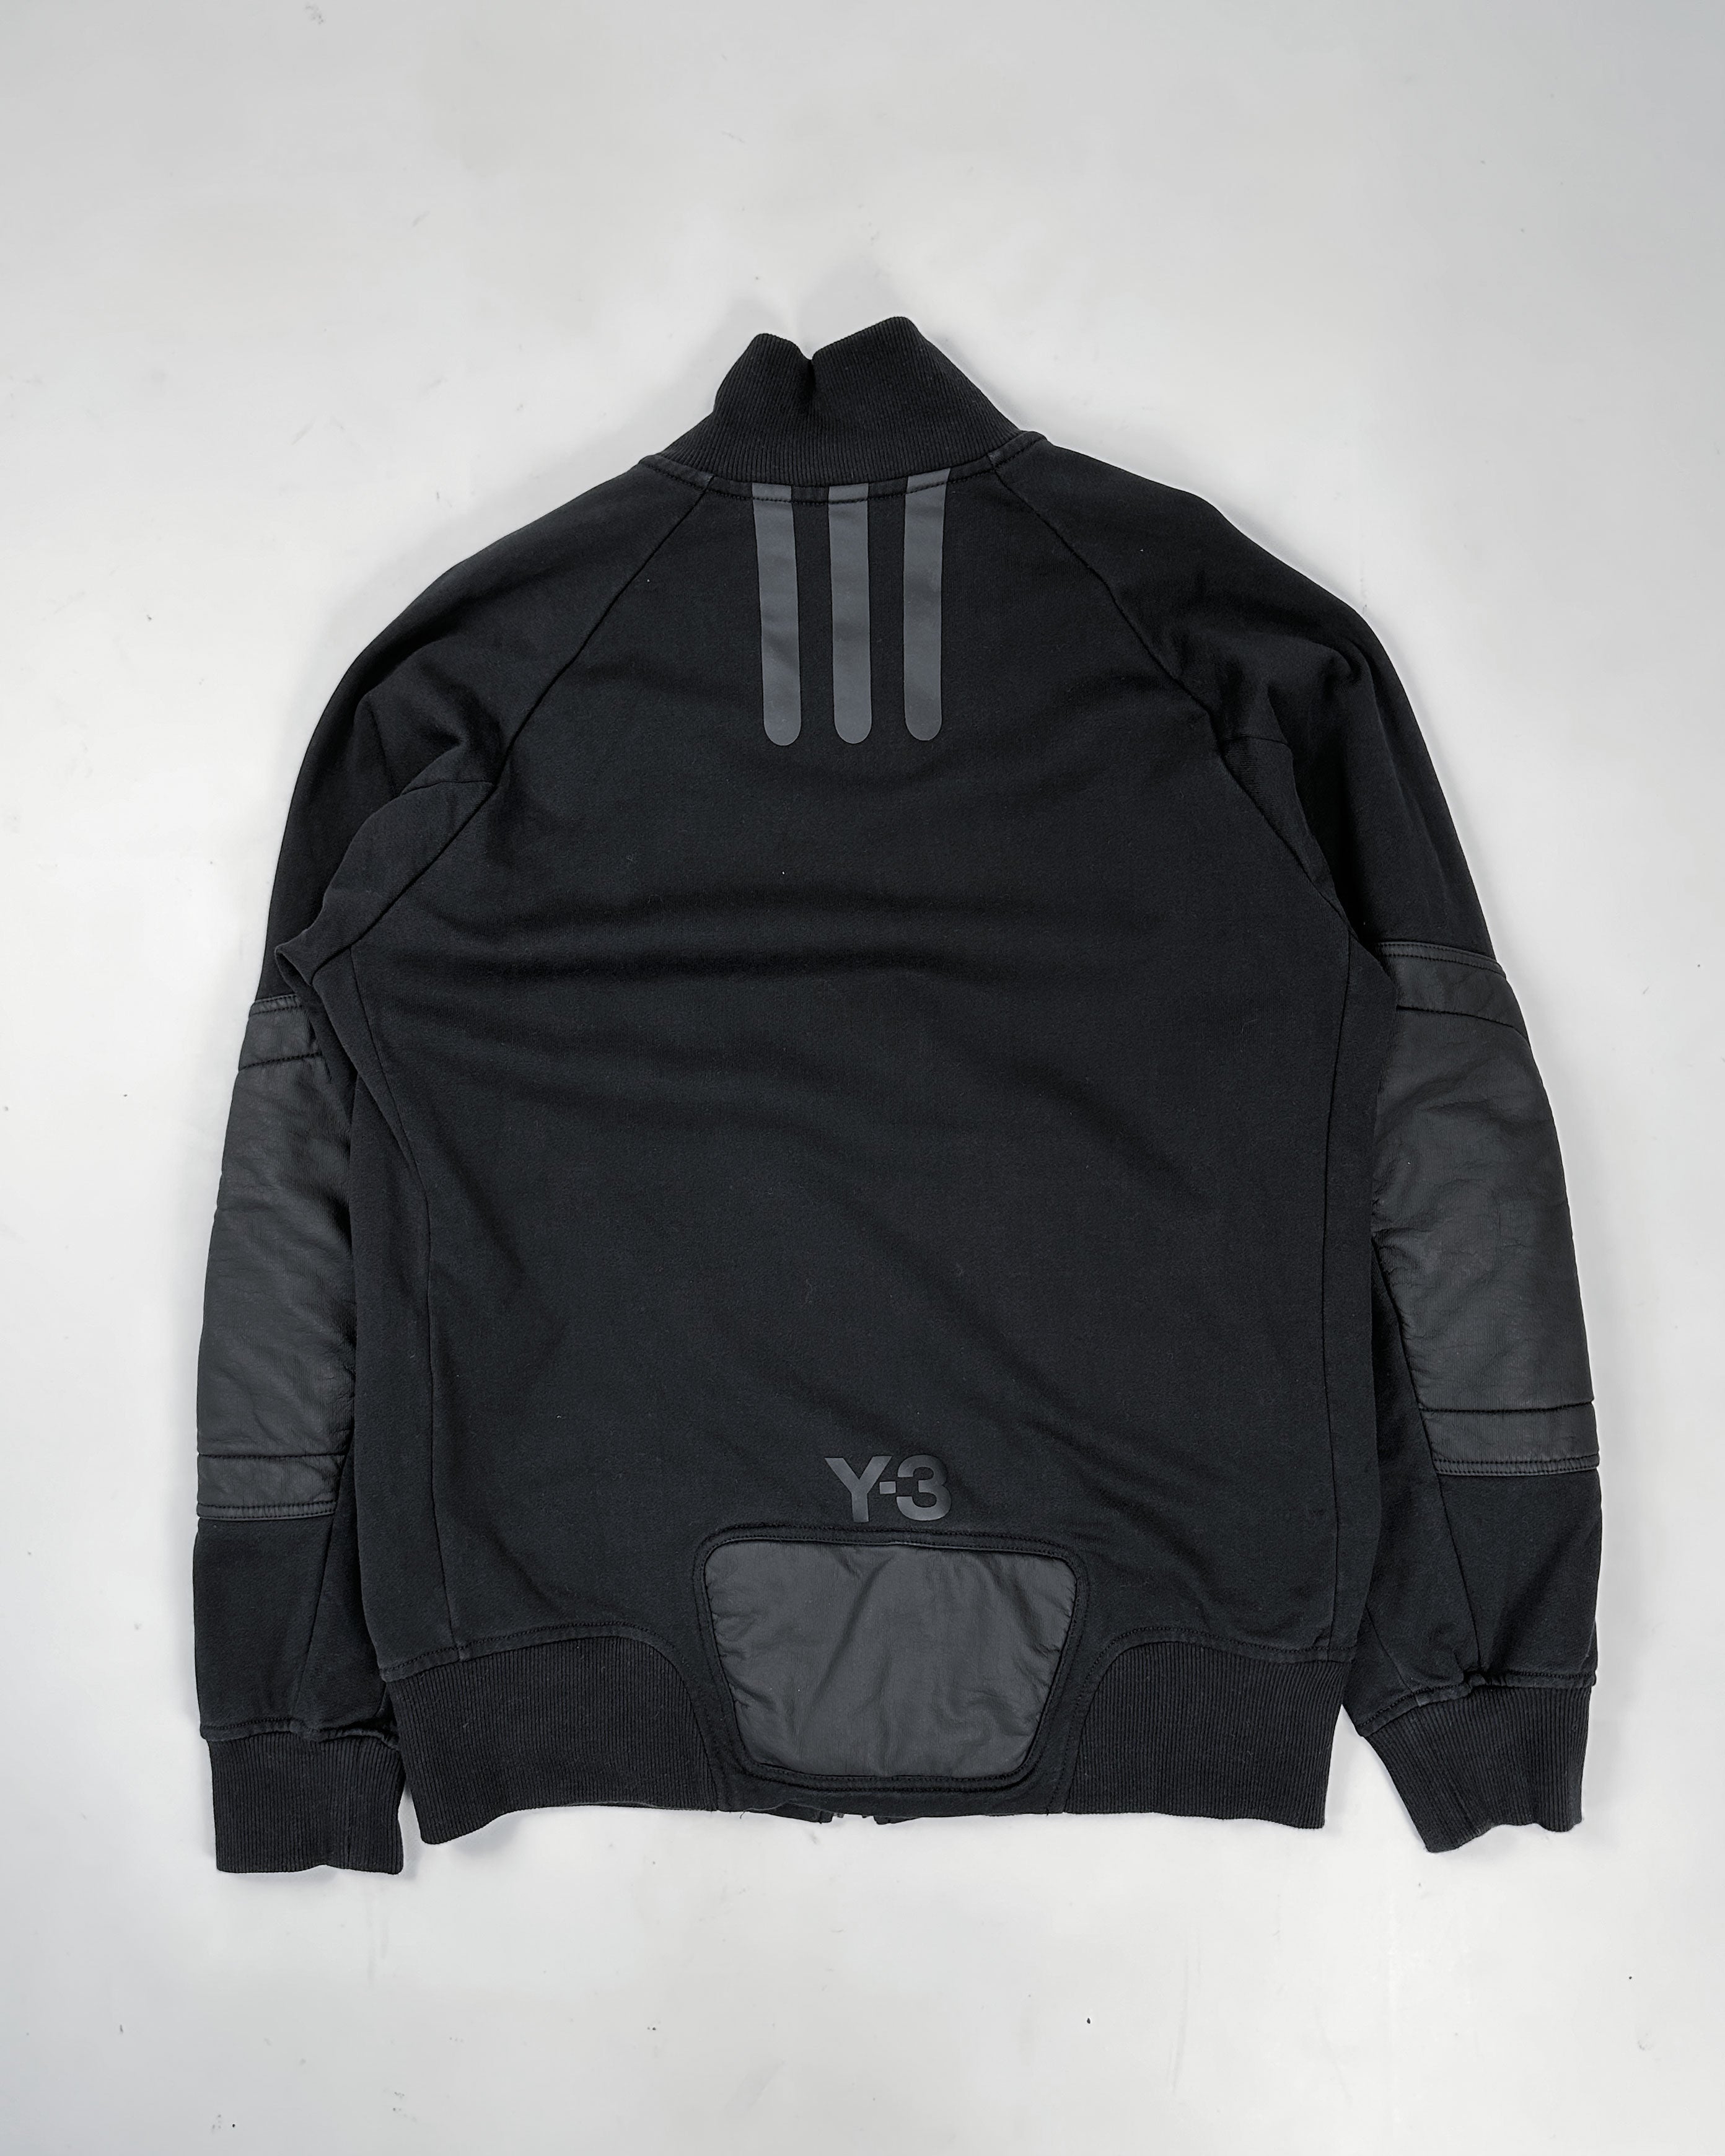 Adidas X Yohji Yamamoto (Y-3) 2-Texture Zip Up 2017 – Vintage TTS